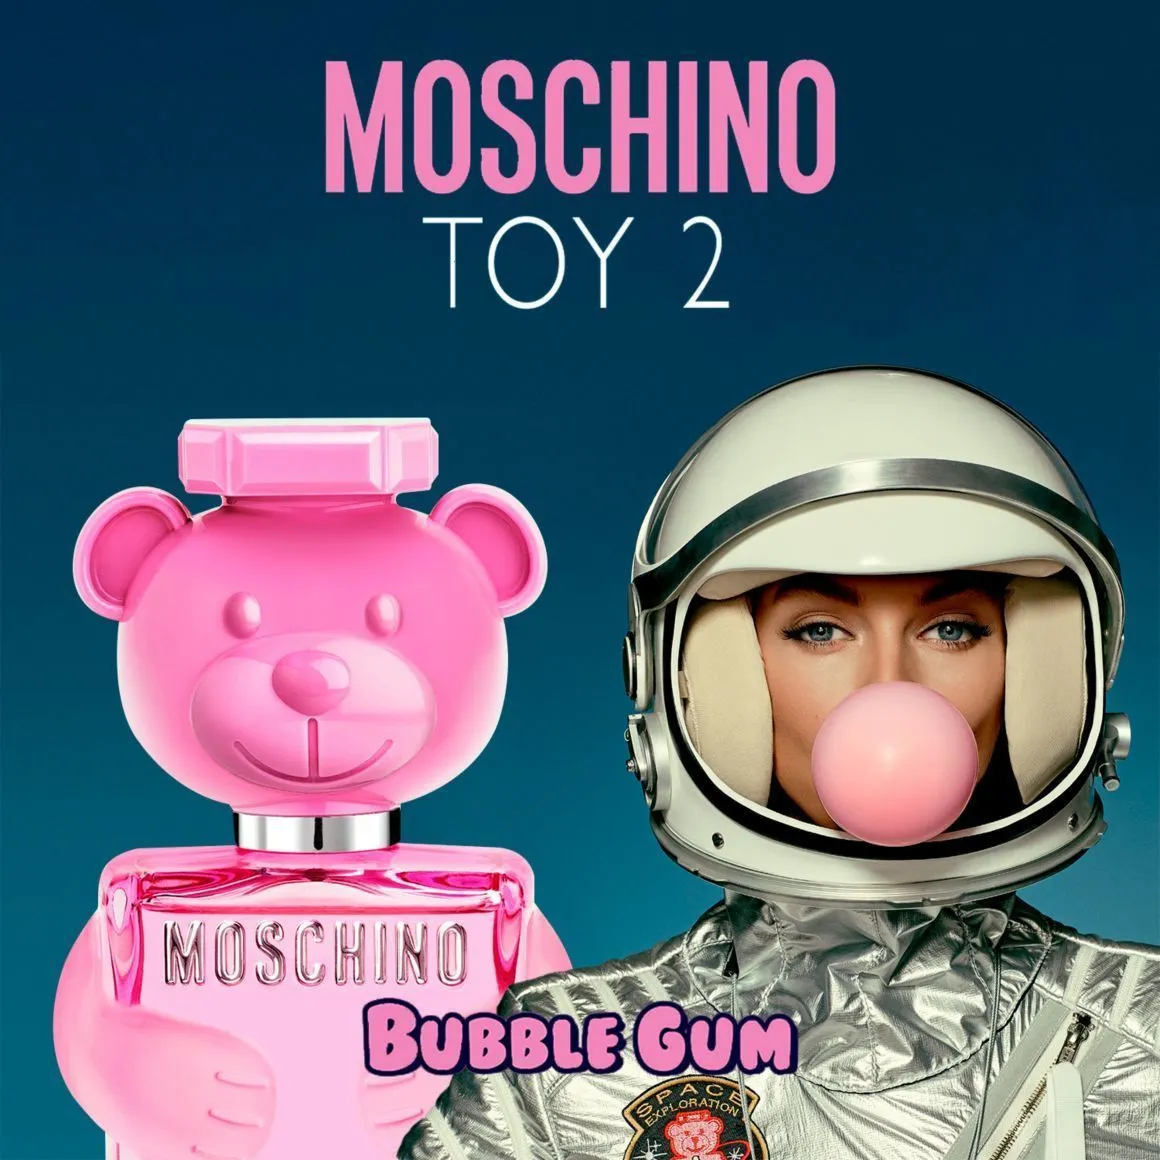 Moschino Toy 2 Bubble Gym ayollar atiri#1